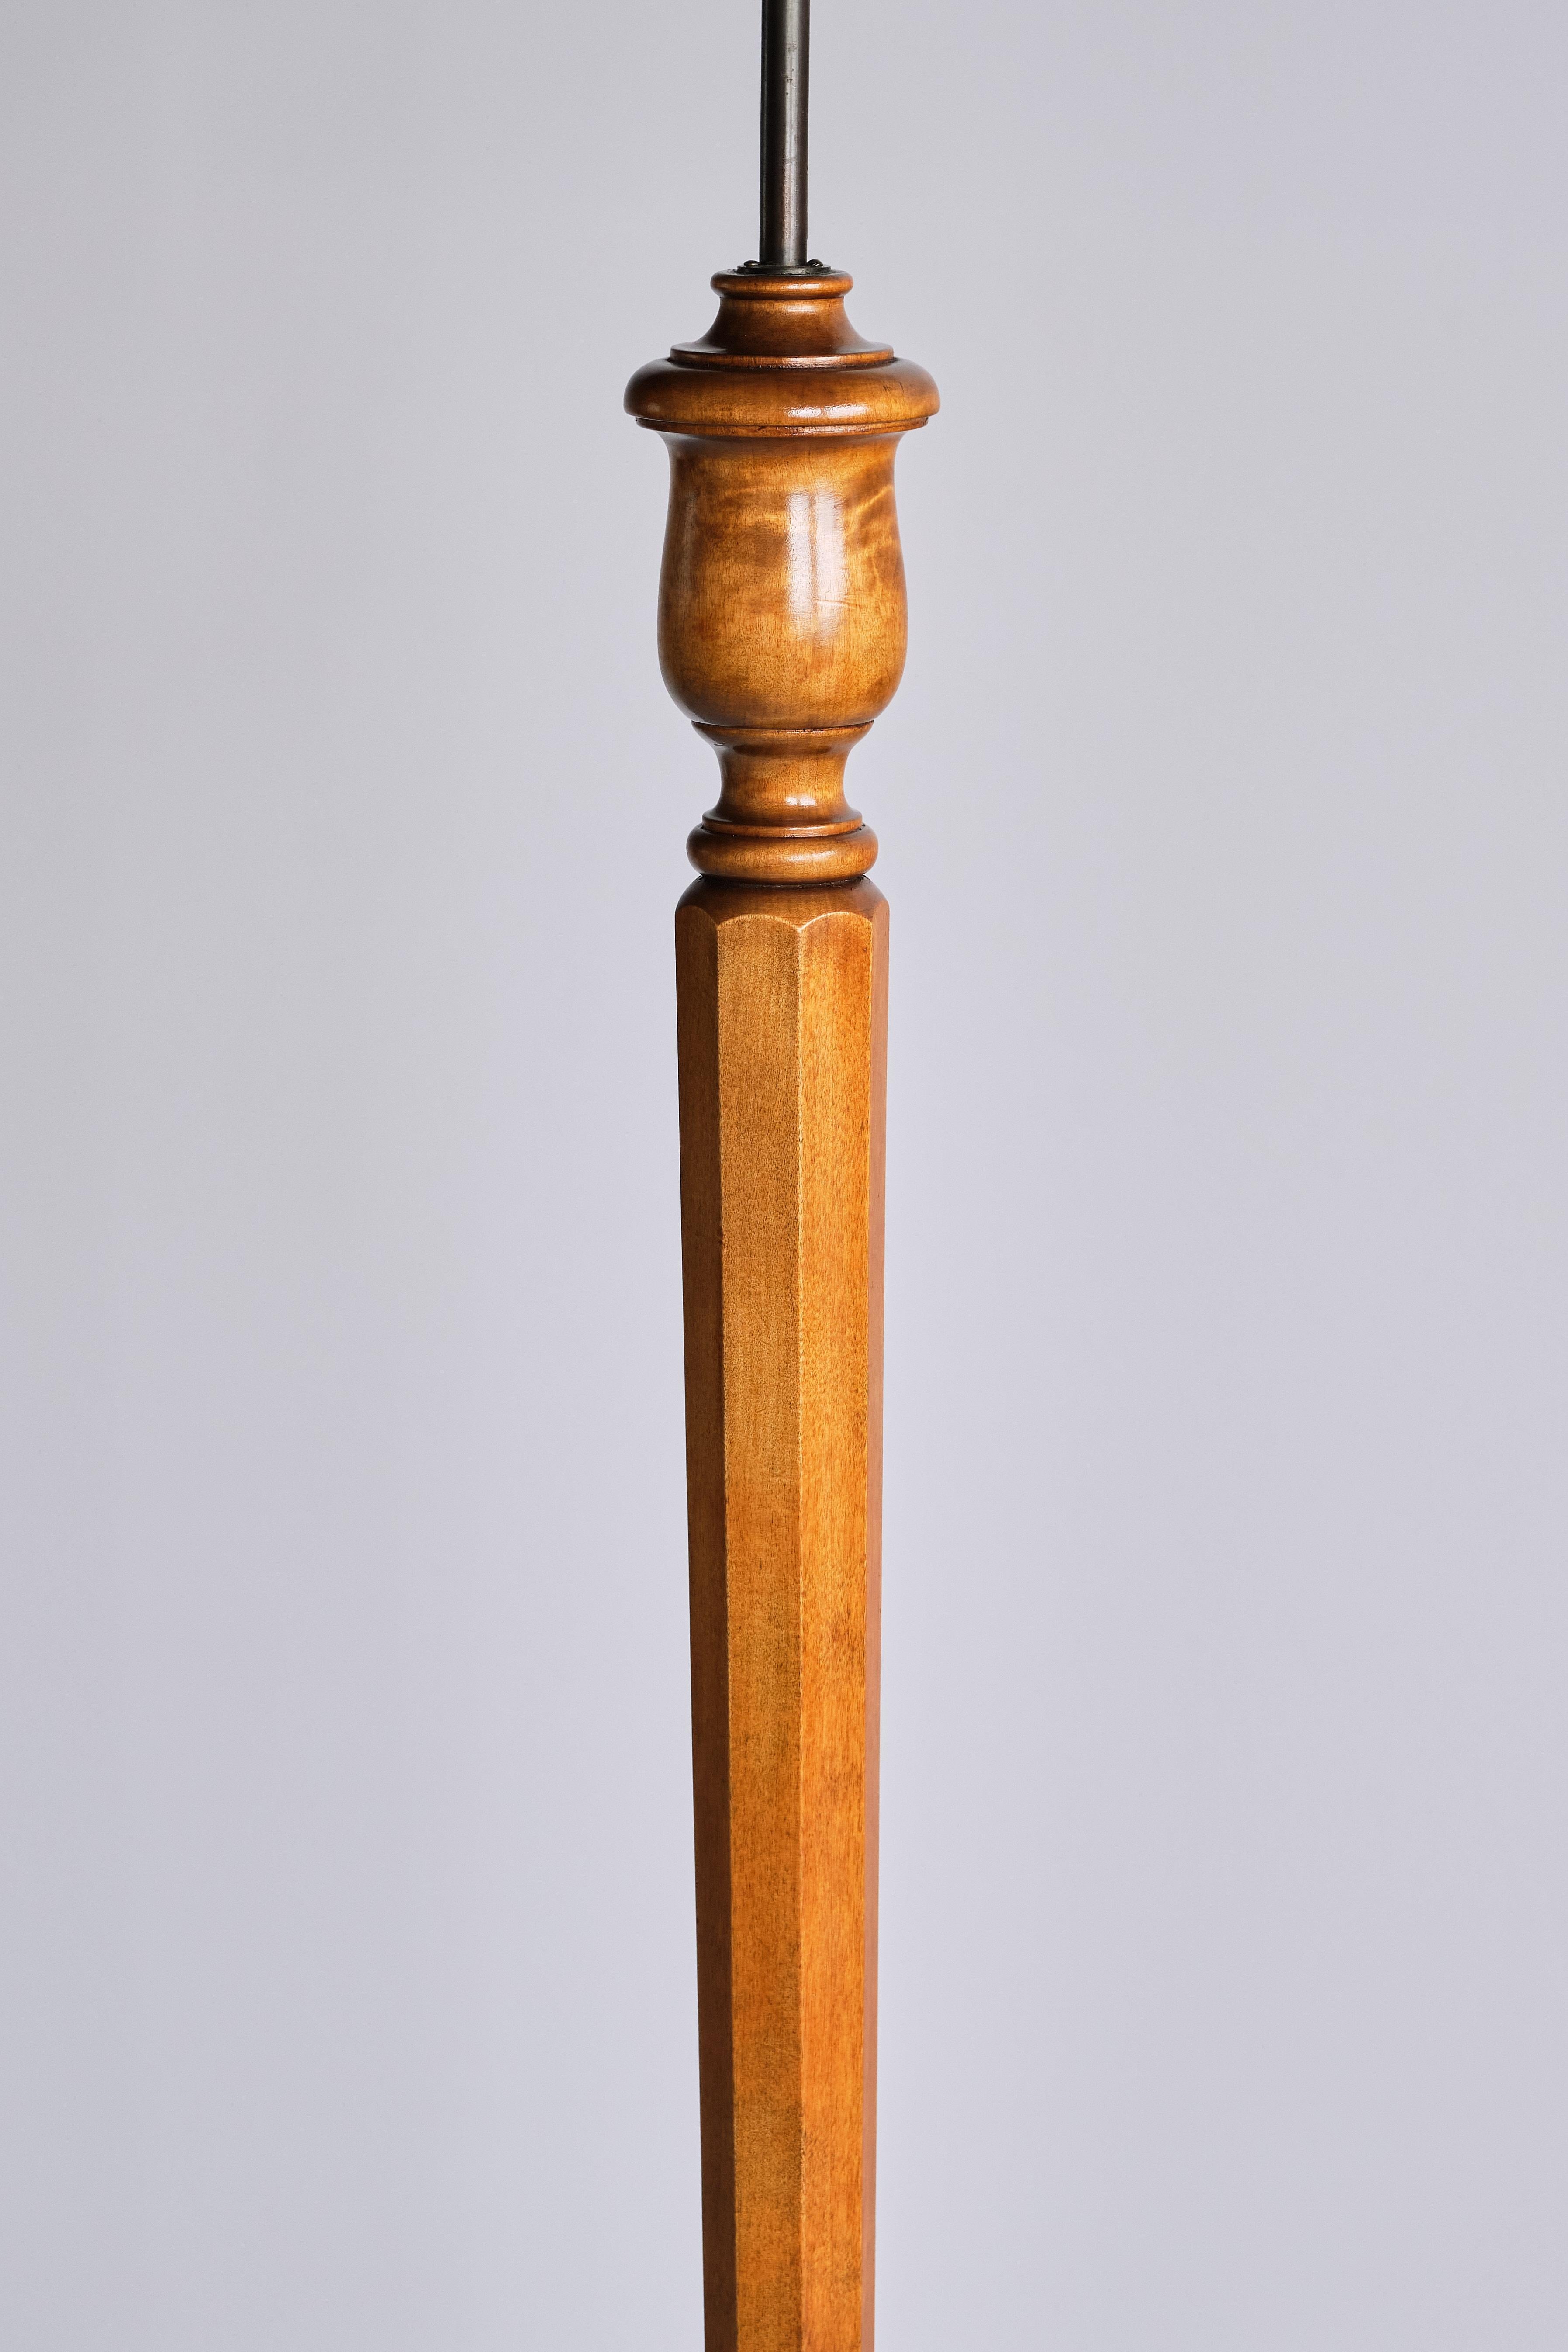 Rare Otto Schulz Floor Lamp in Birch Wood, Josef Frank Shade, Boet, Sweden, 1928 For Sale 3